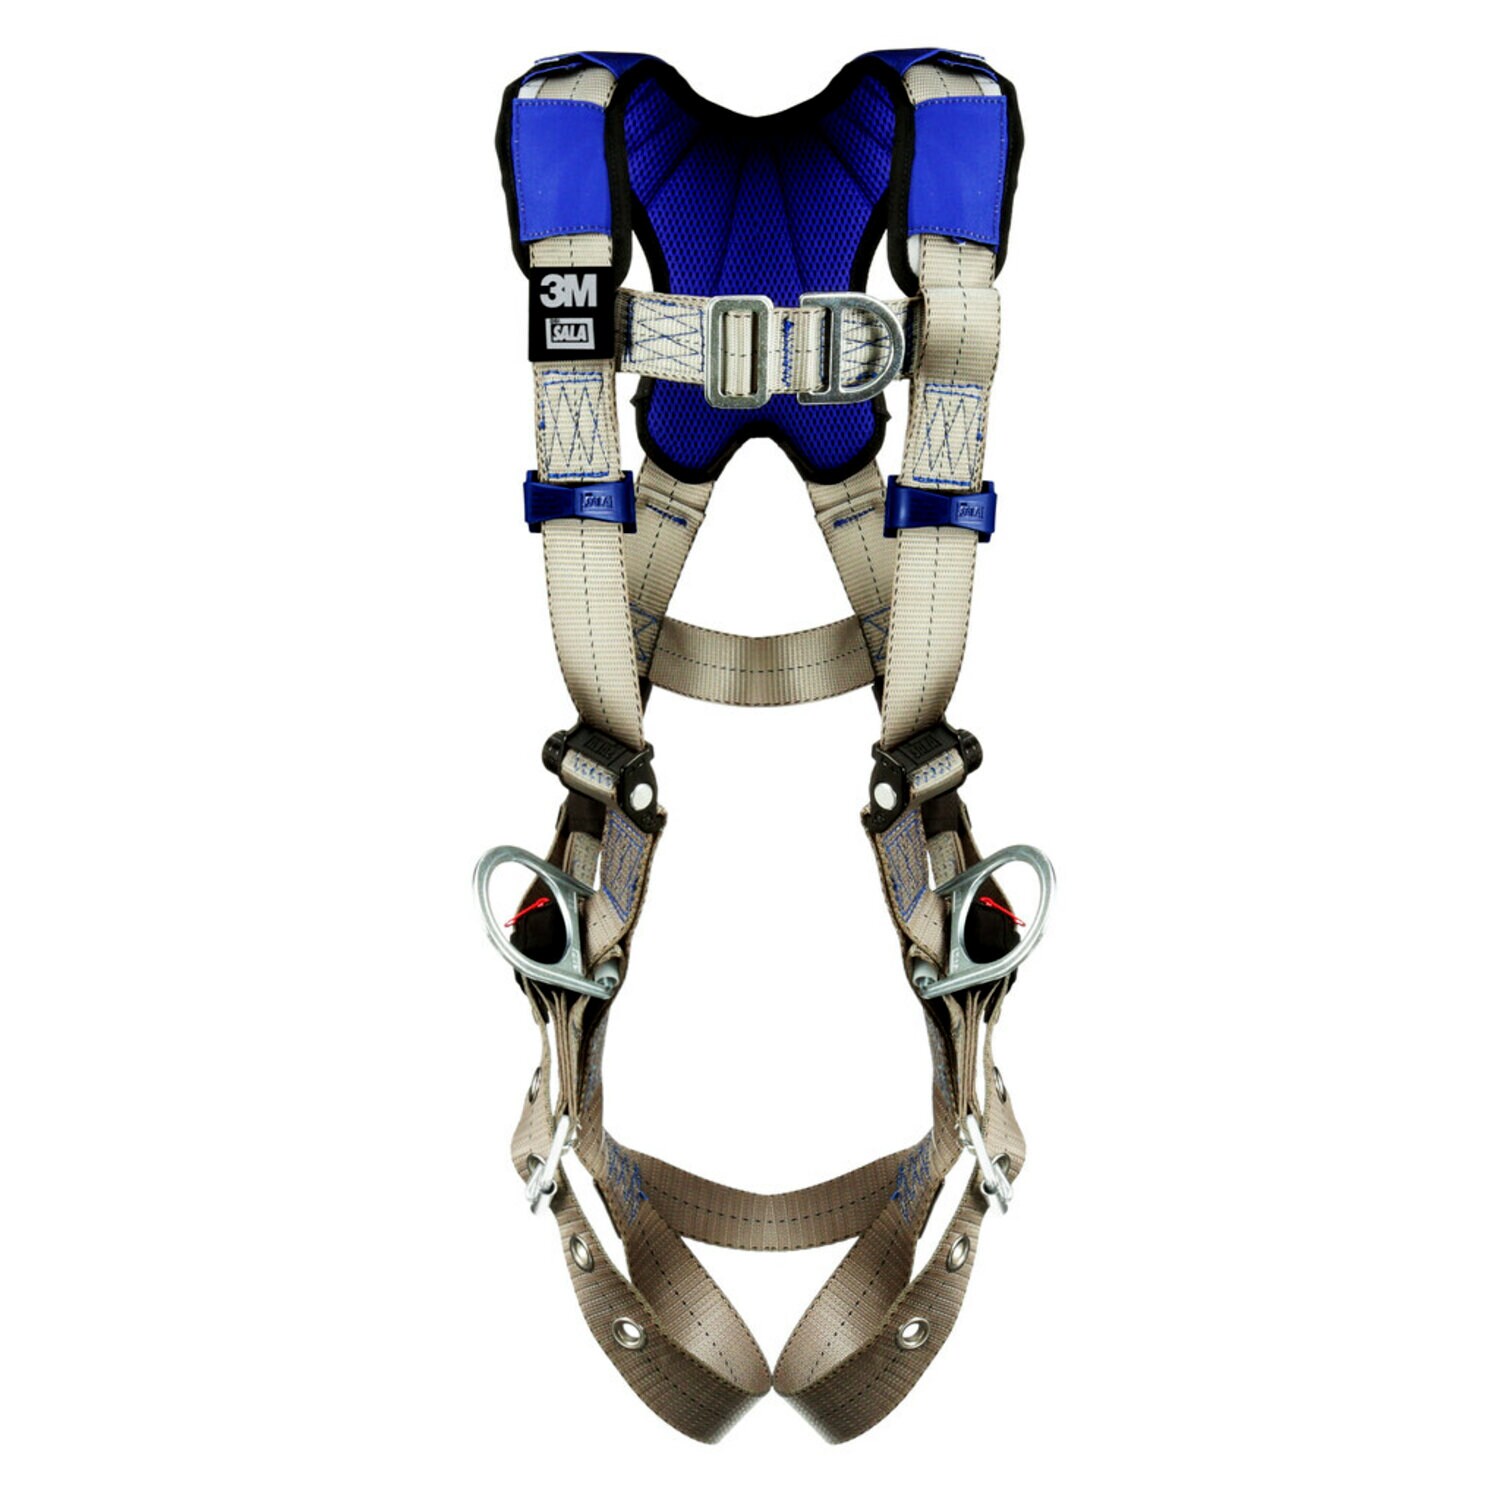 7012817463 - 3M DBI-SALA ExoFit X100 Comfort Vest Climbing/Positioning Safety Harness 1401017, Large